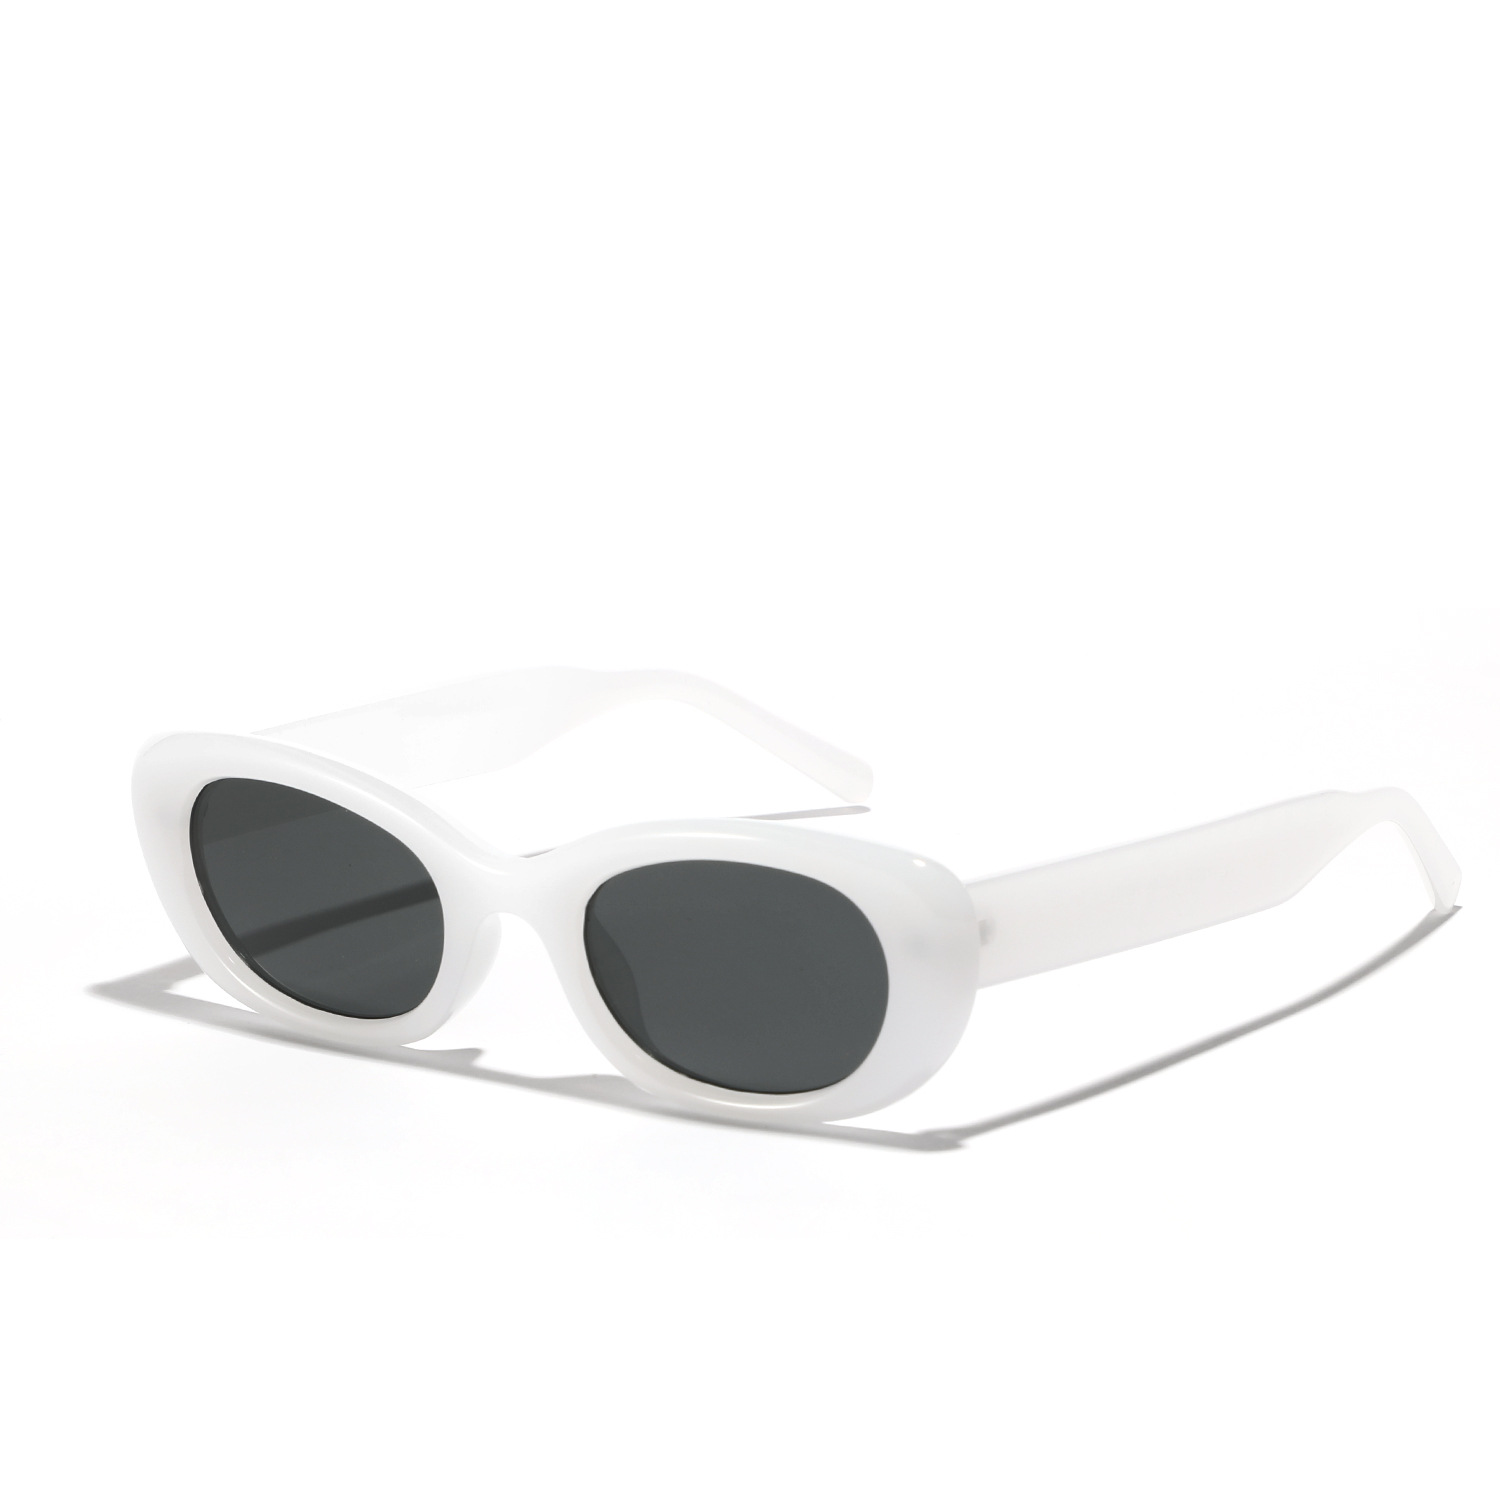 Retro Oval Fashion Sunglasses